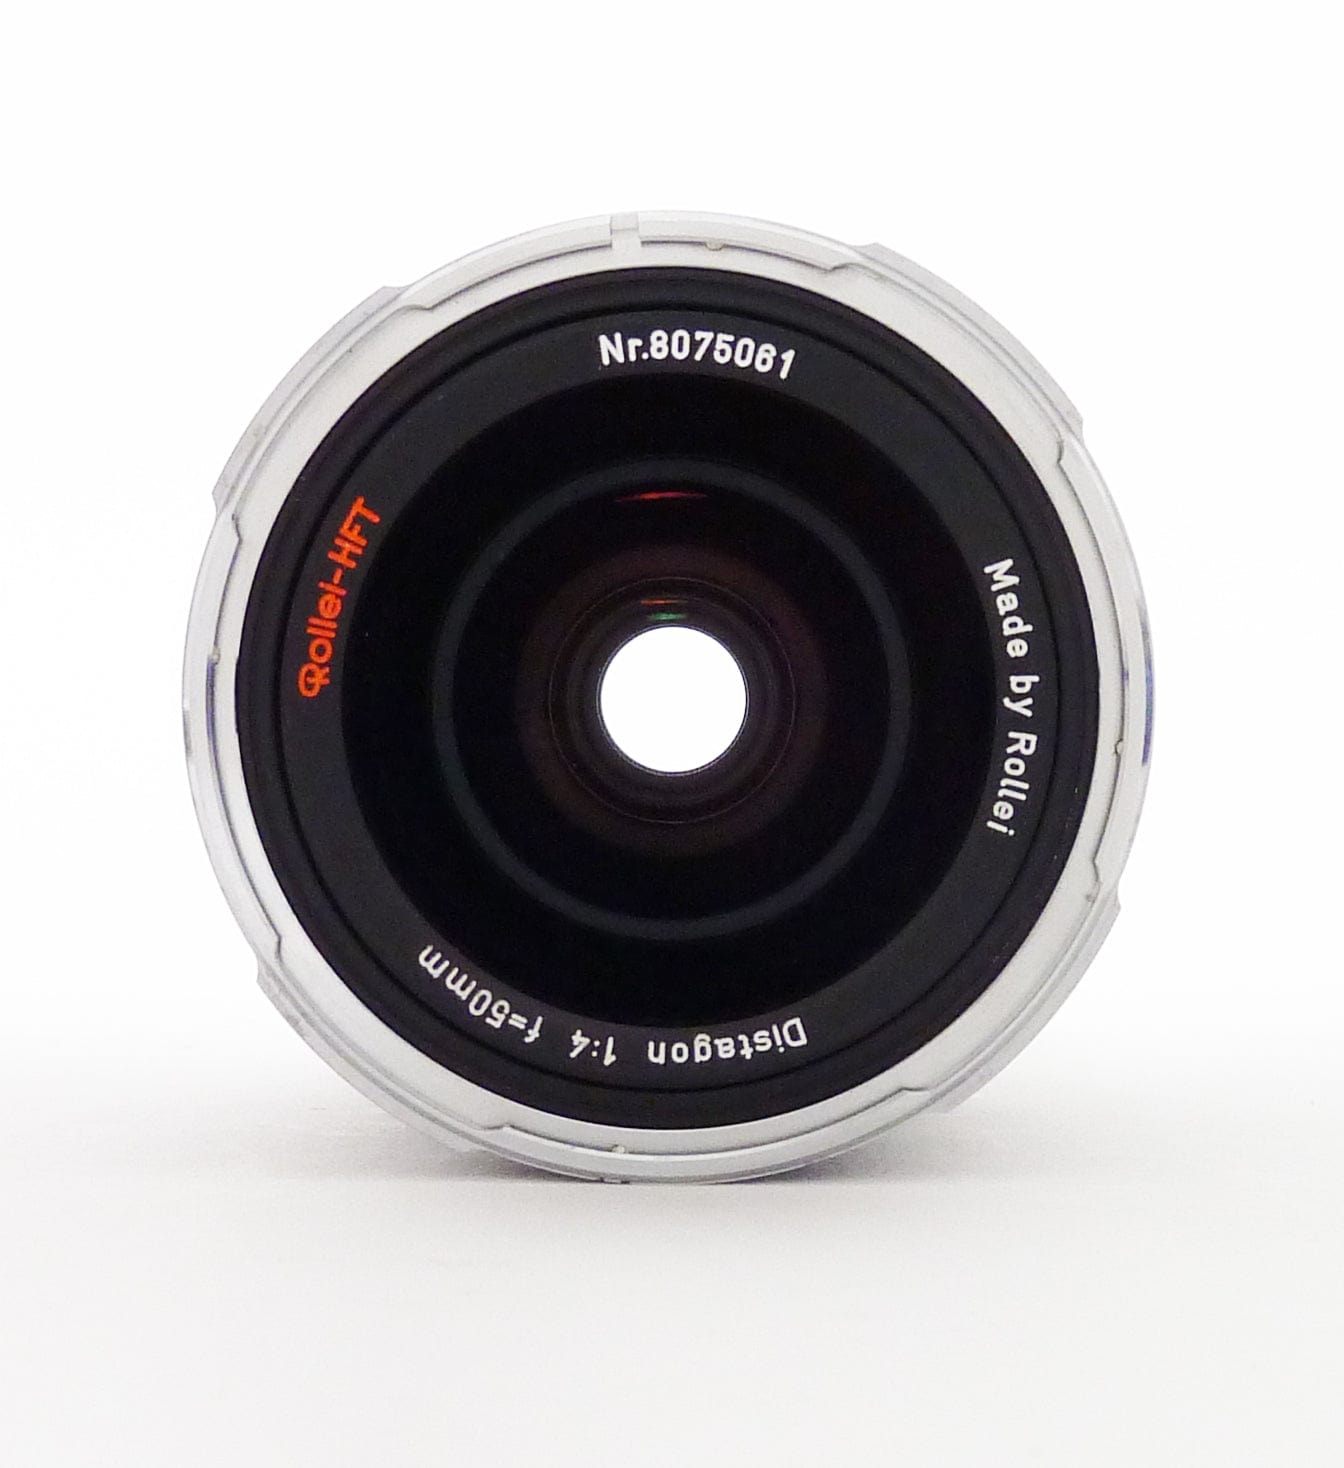 Rollei-HFT Distagon 50mm F4 for Rolleiflex SLR Cameras